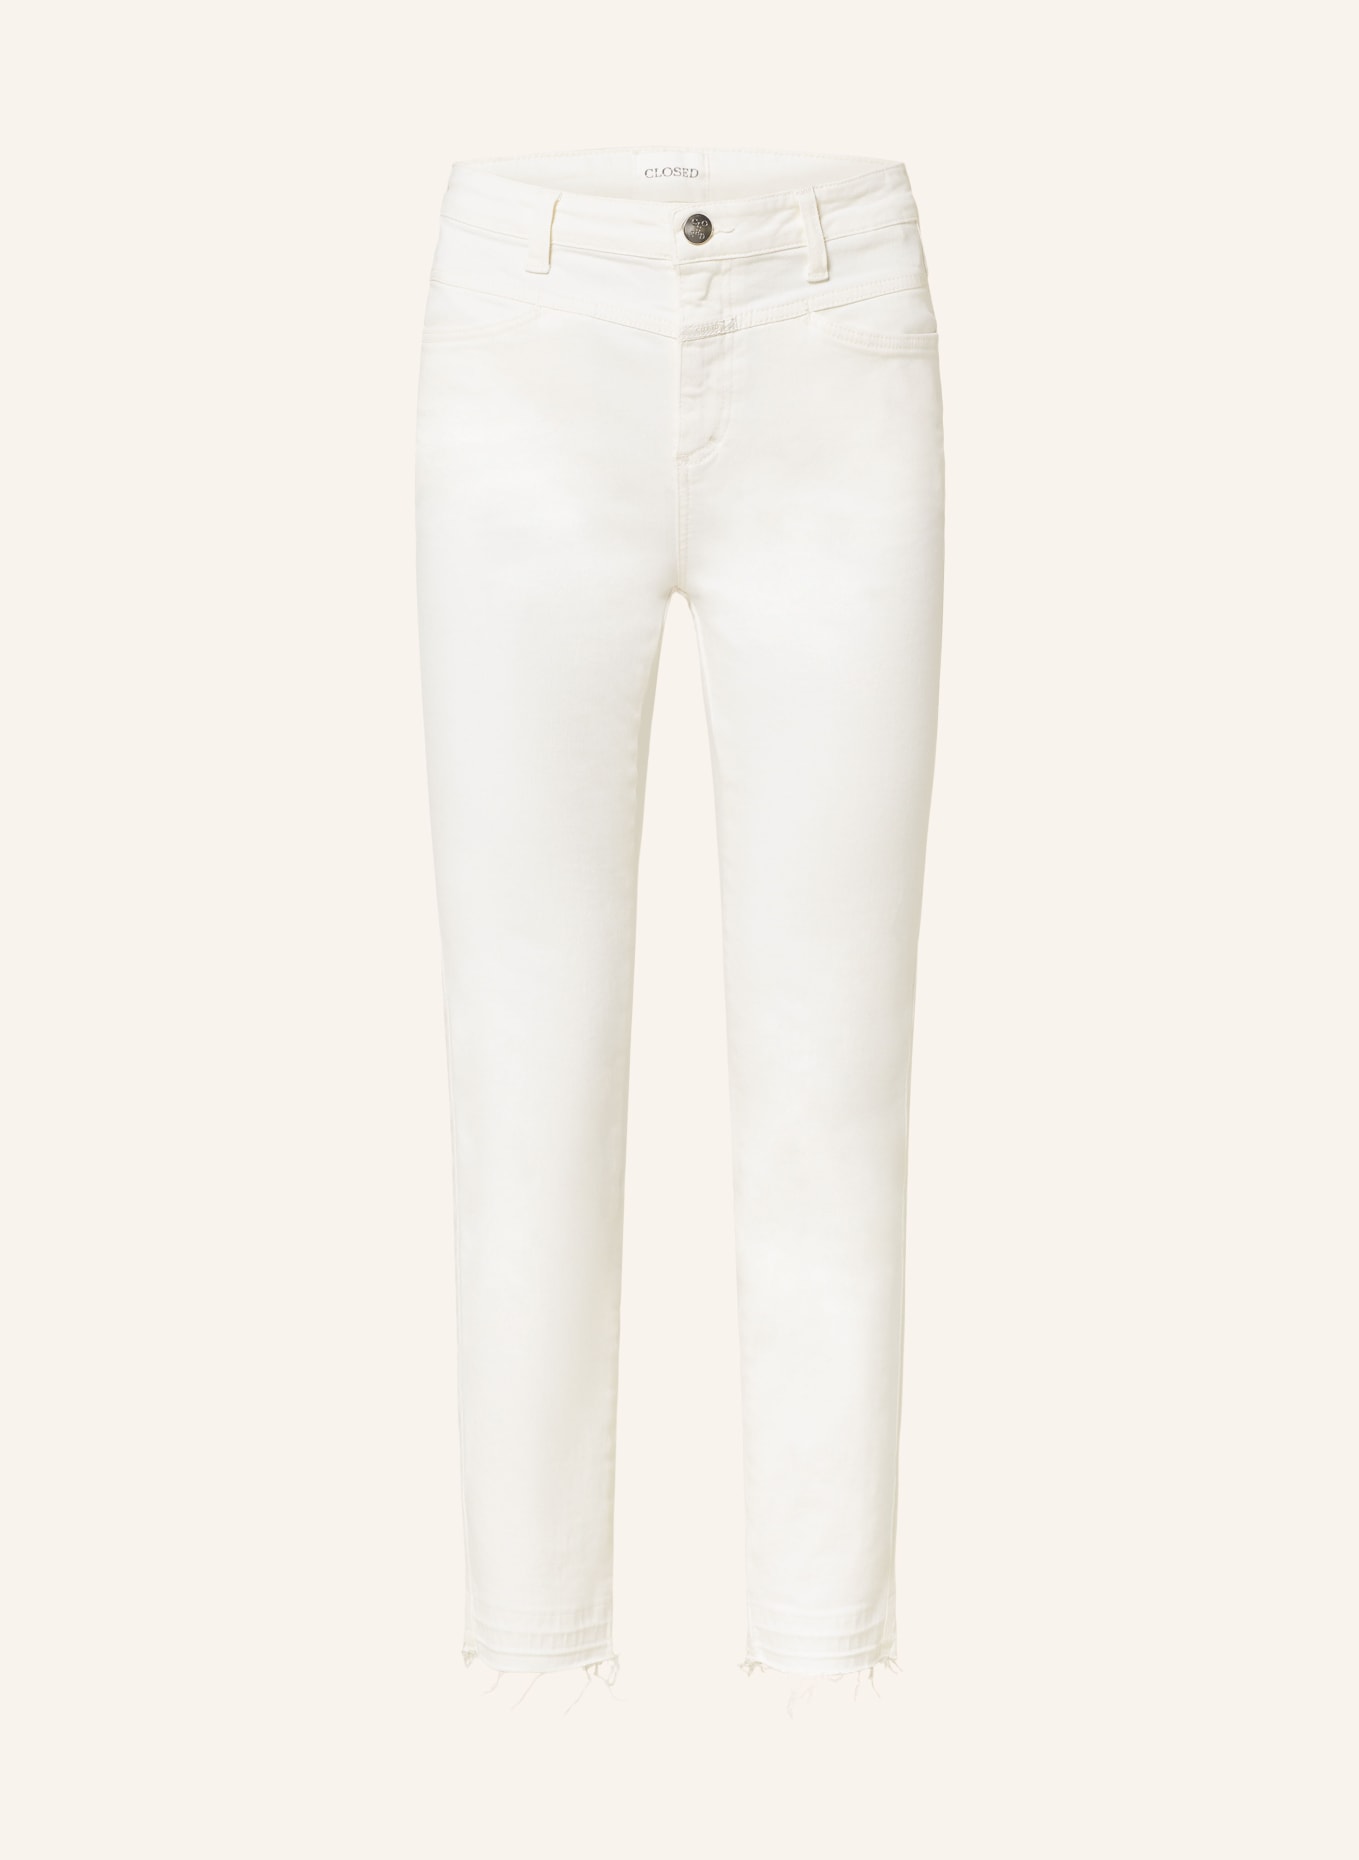 CLOSED Skinny Jeans SKINNY PUSHER, Farbe: 218 IVORY (Bild 1)